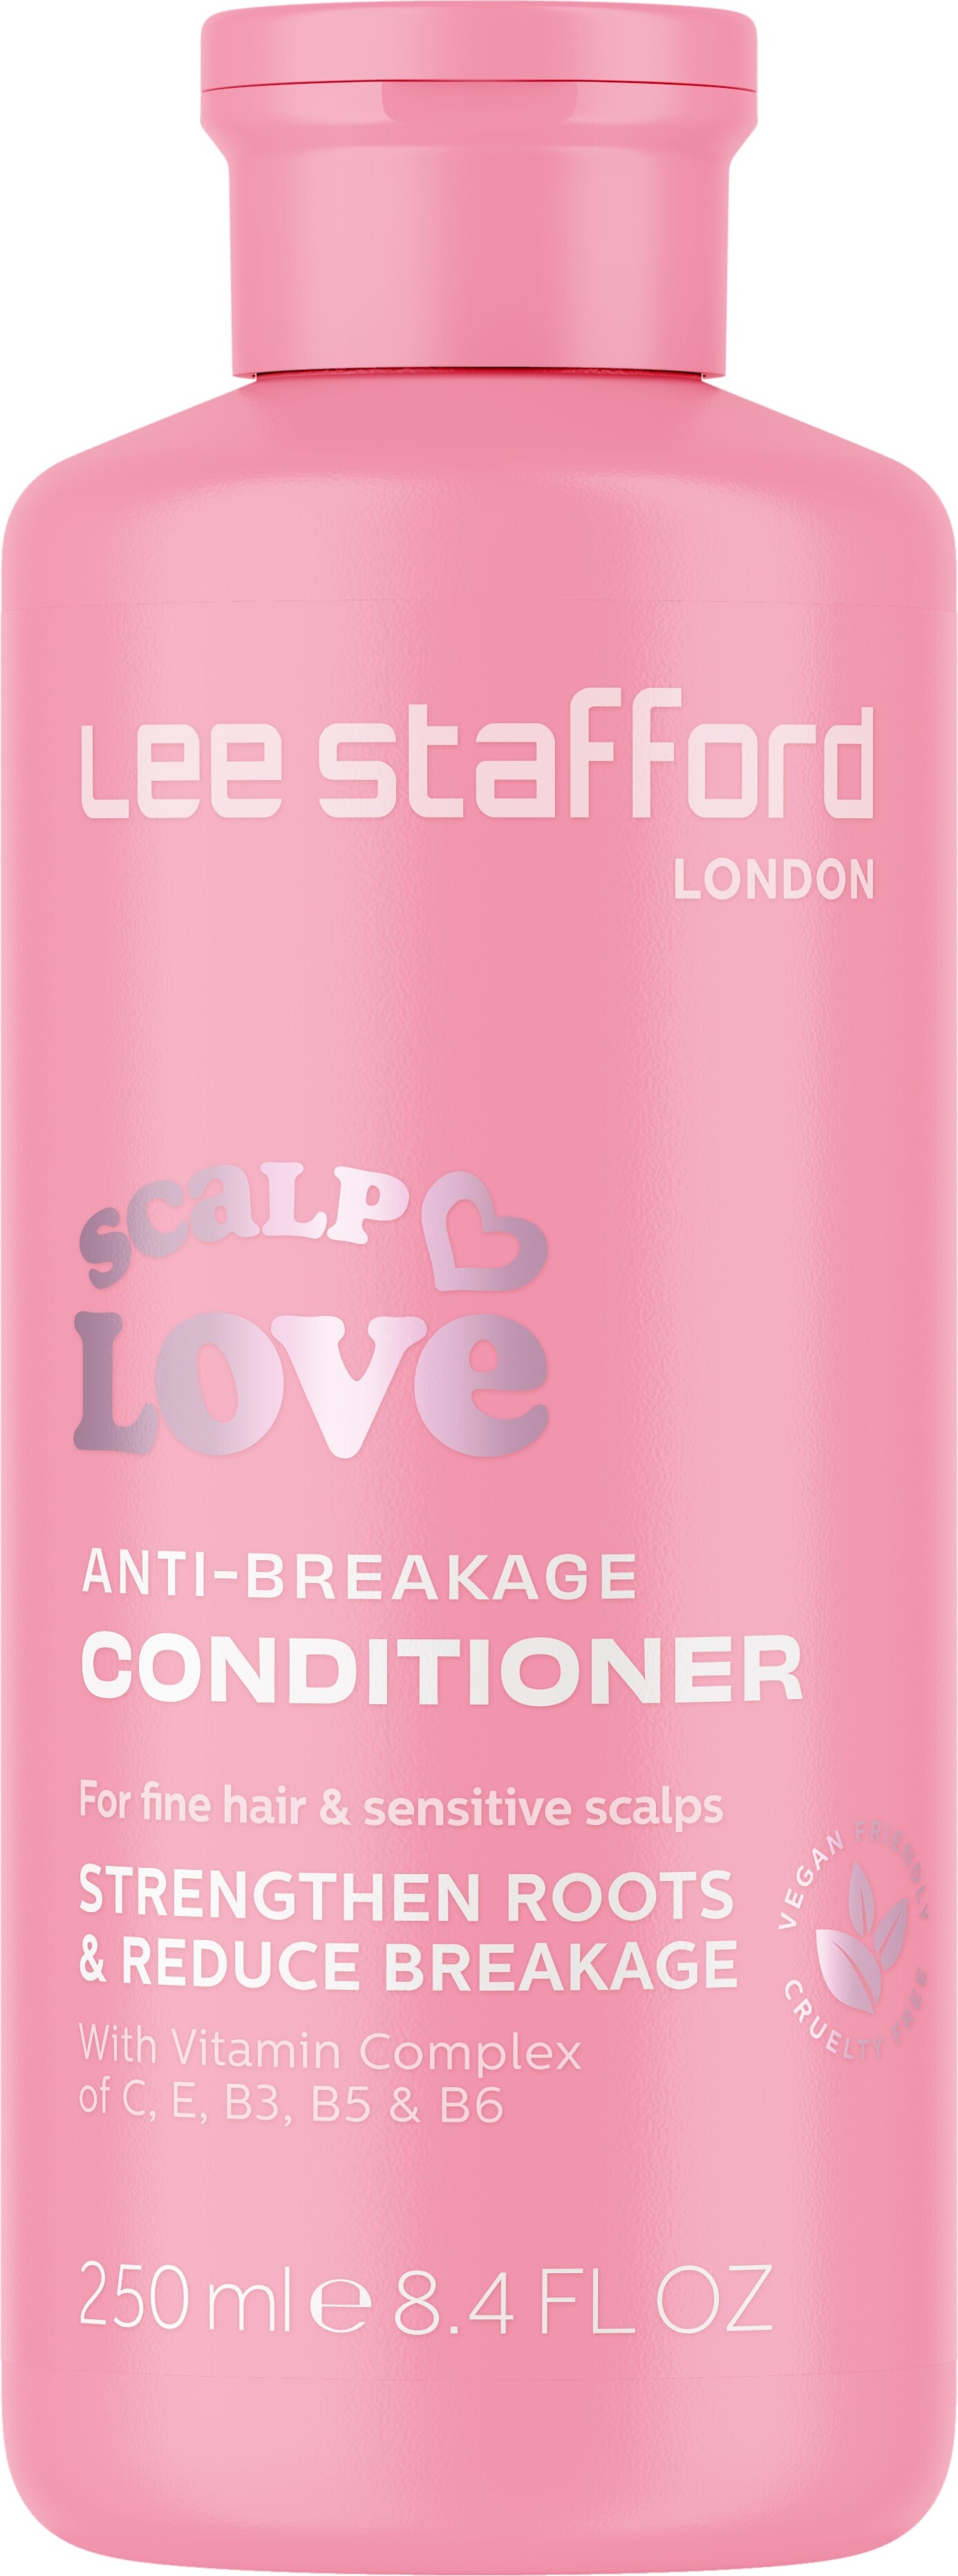 Se Lee Stafford - Scalp Love Anti-breakage Conditioner - 250 Ml hos Gucca.dk